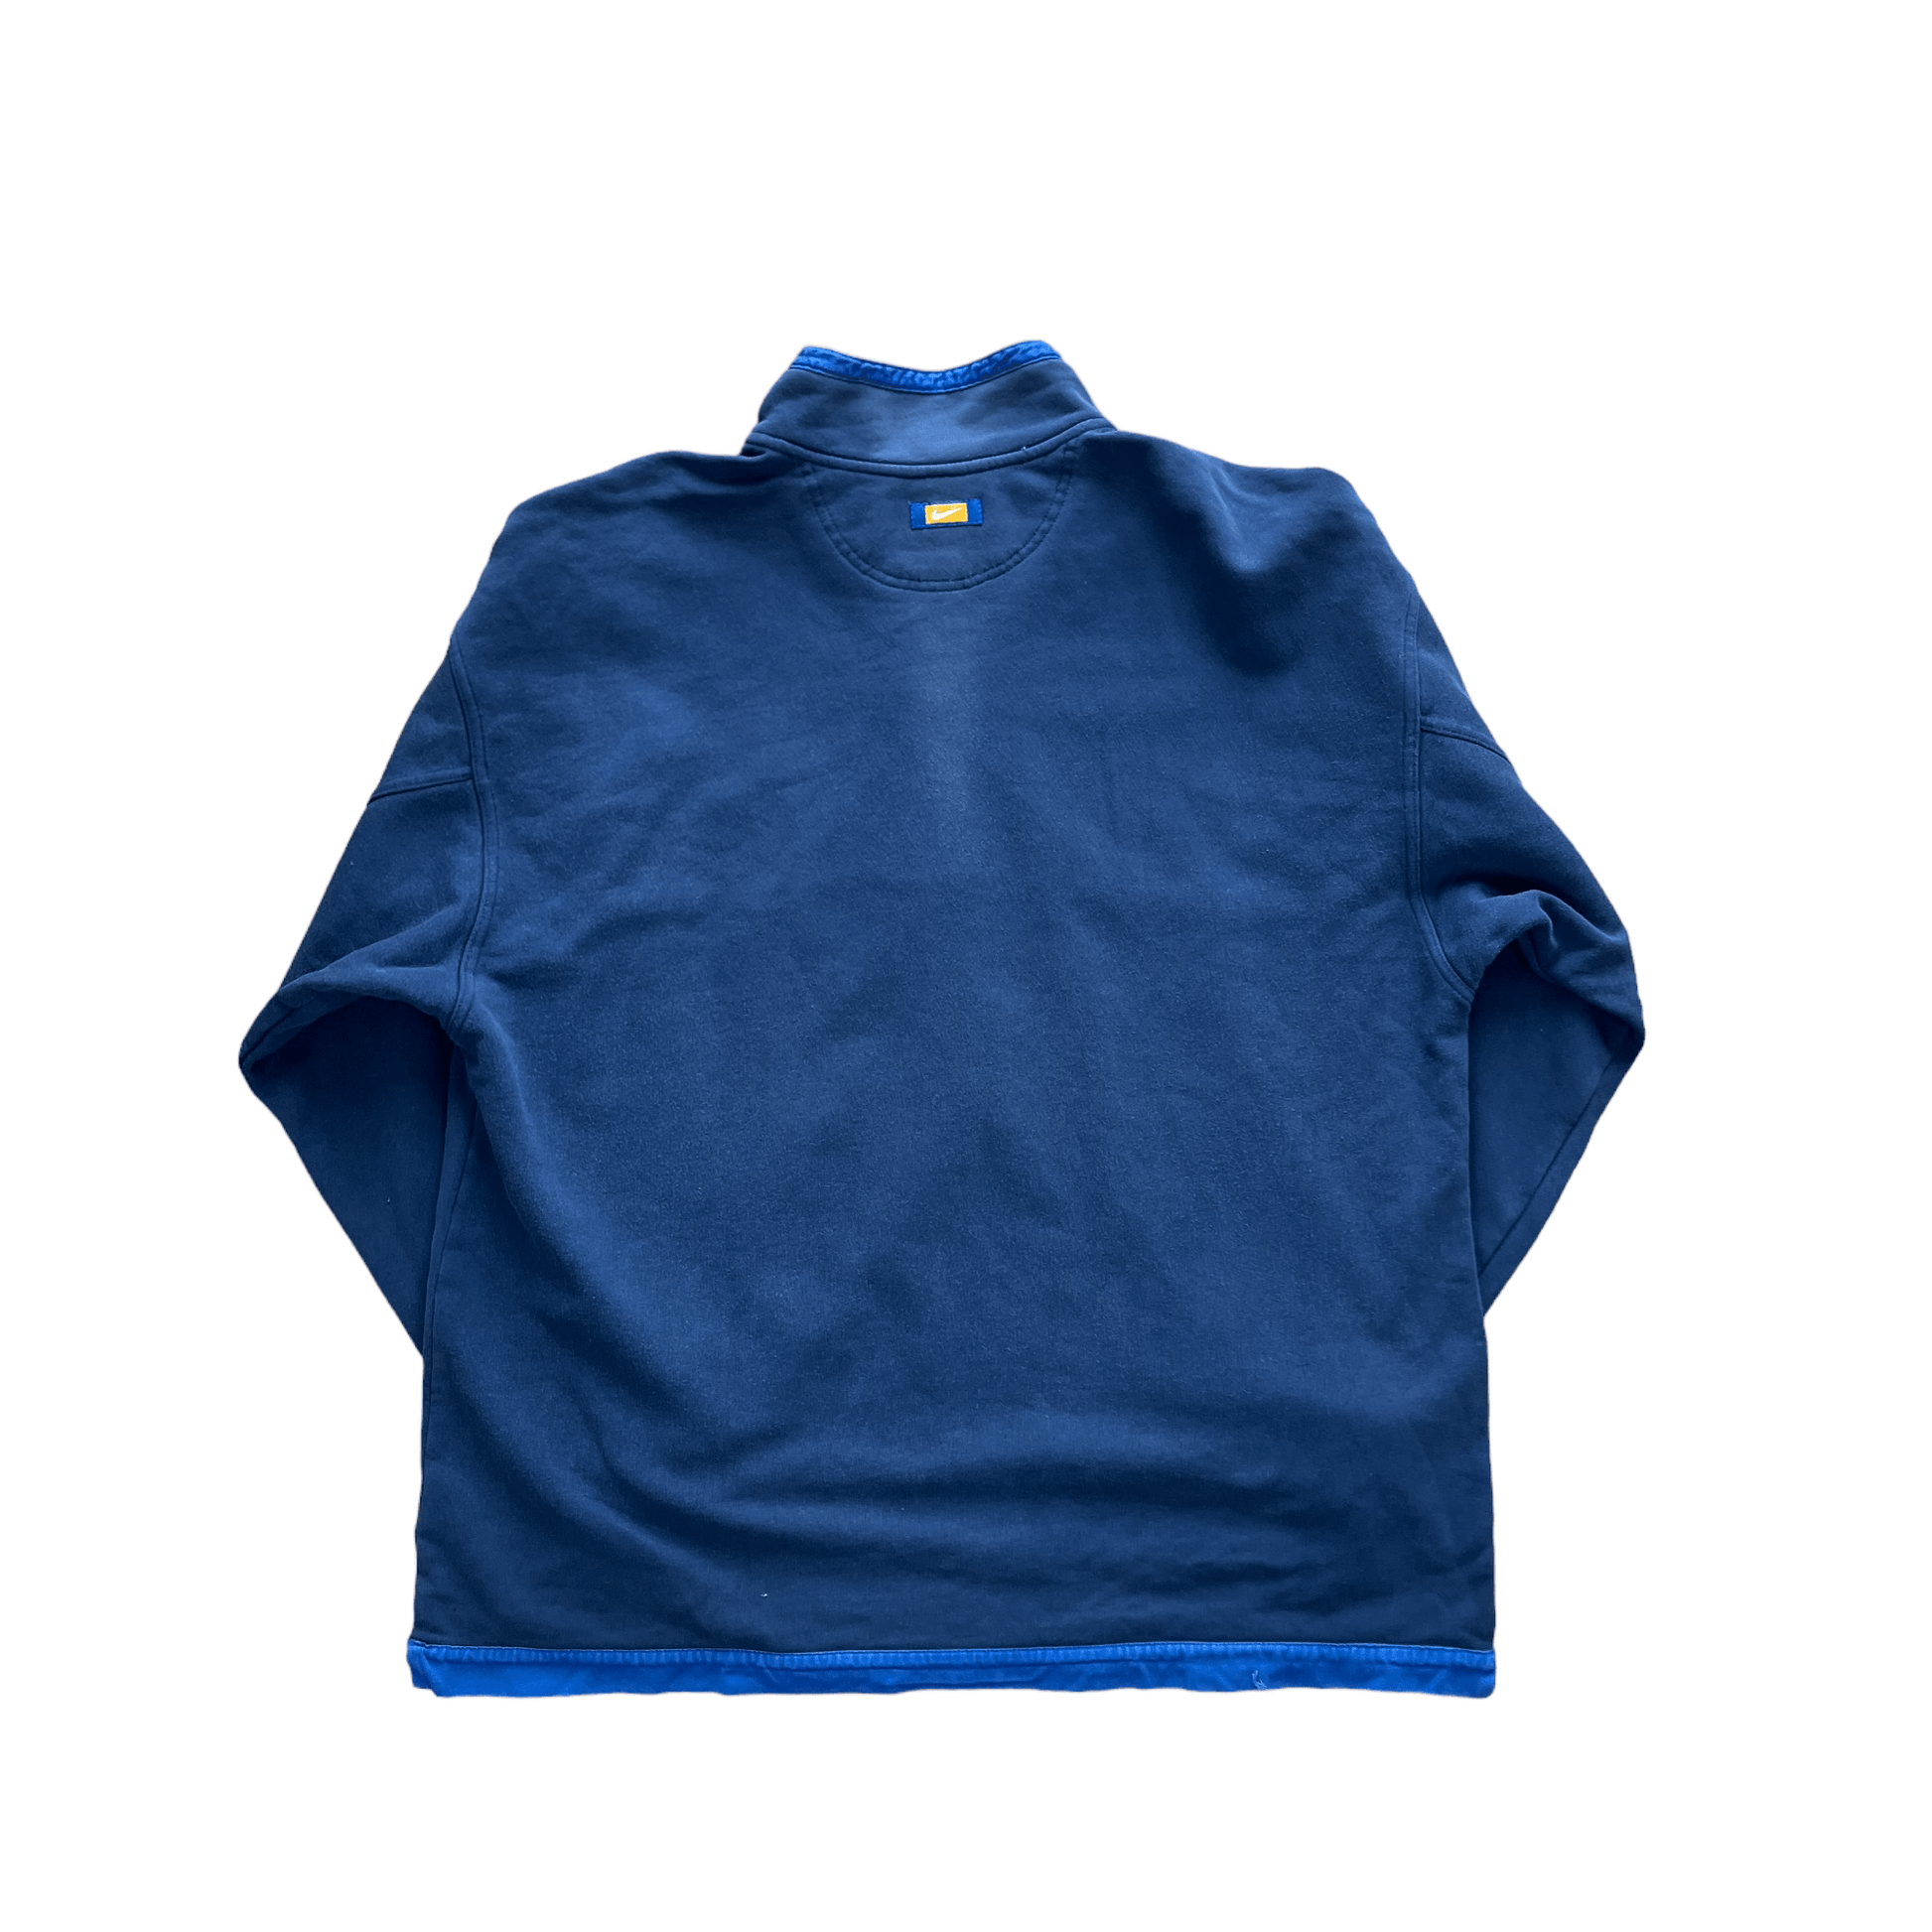 Vintage 90s Navy Blue Nike Quarter Zip Sweatshirt - Extra Large - The Streetwear Studio